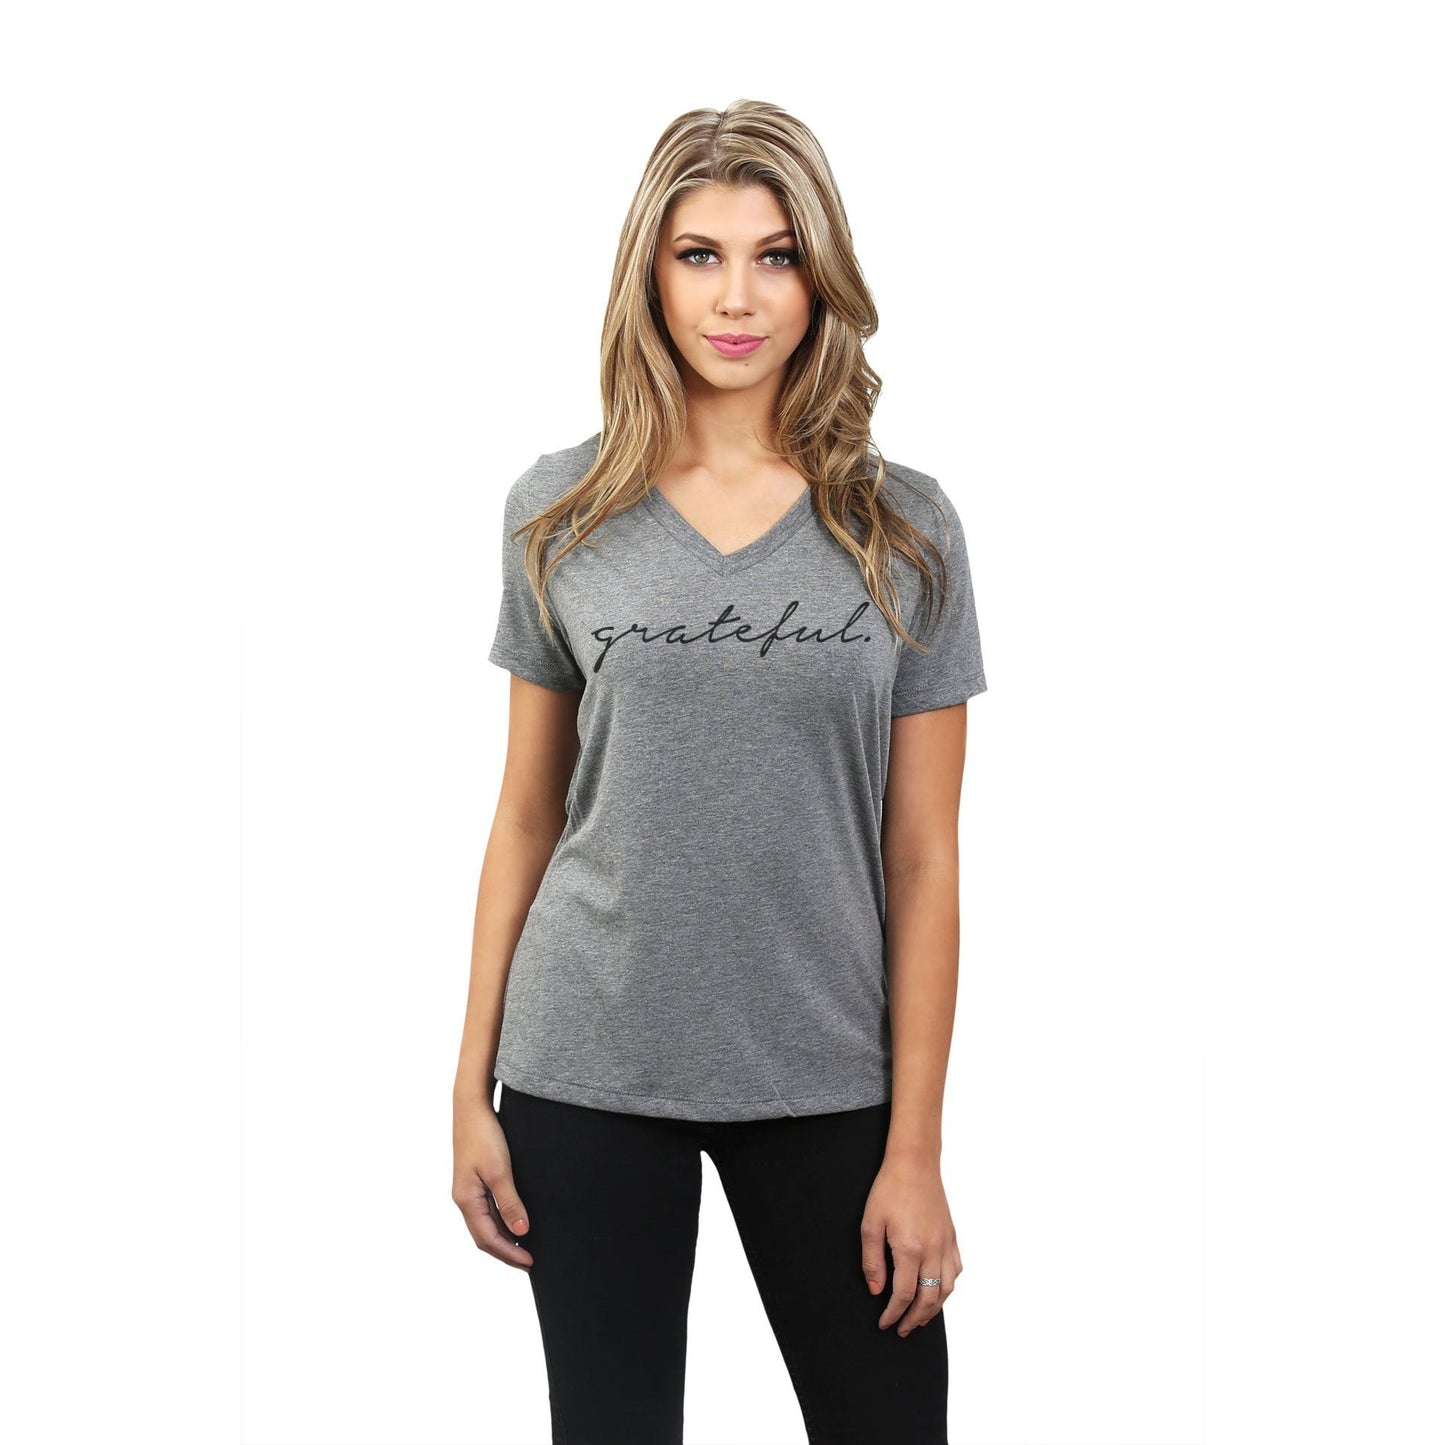 Grateful Women's Relaxed V-Neck T-Shirt Tee Heather Grey Model